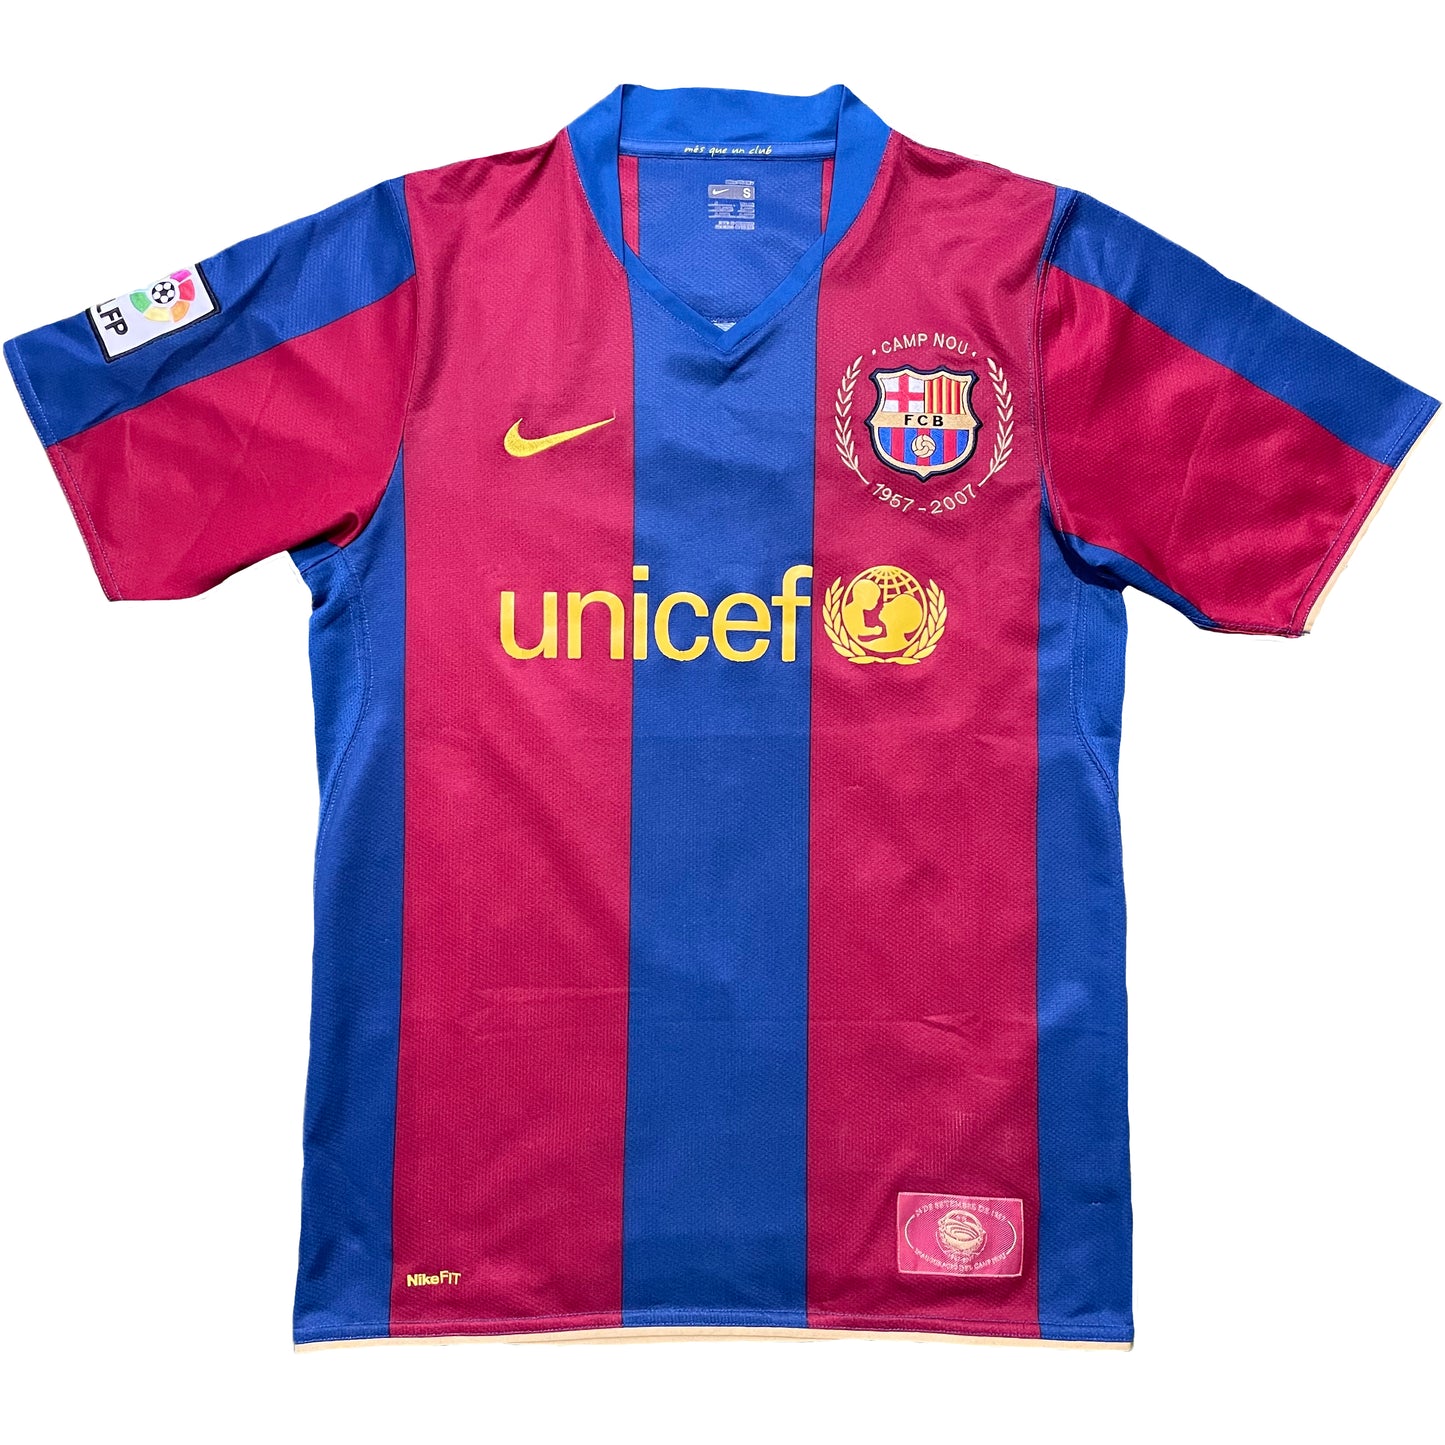 2007-2008 FC Barcelona home shirt #6 Xavi (S)